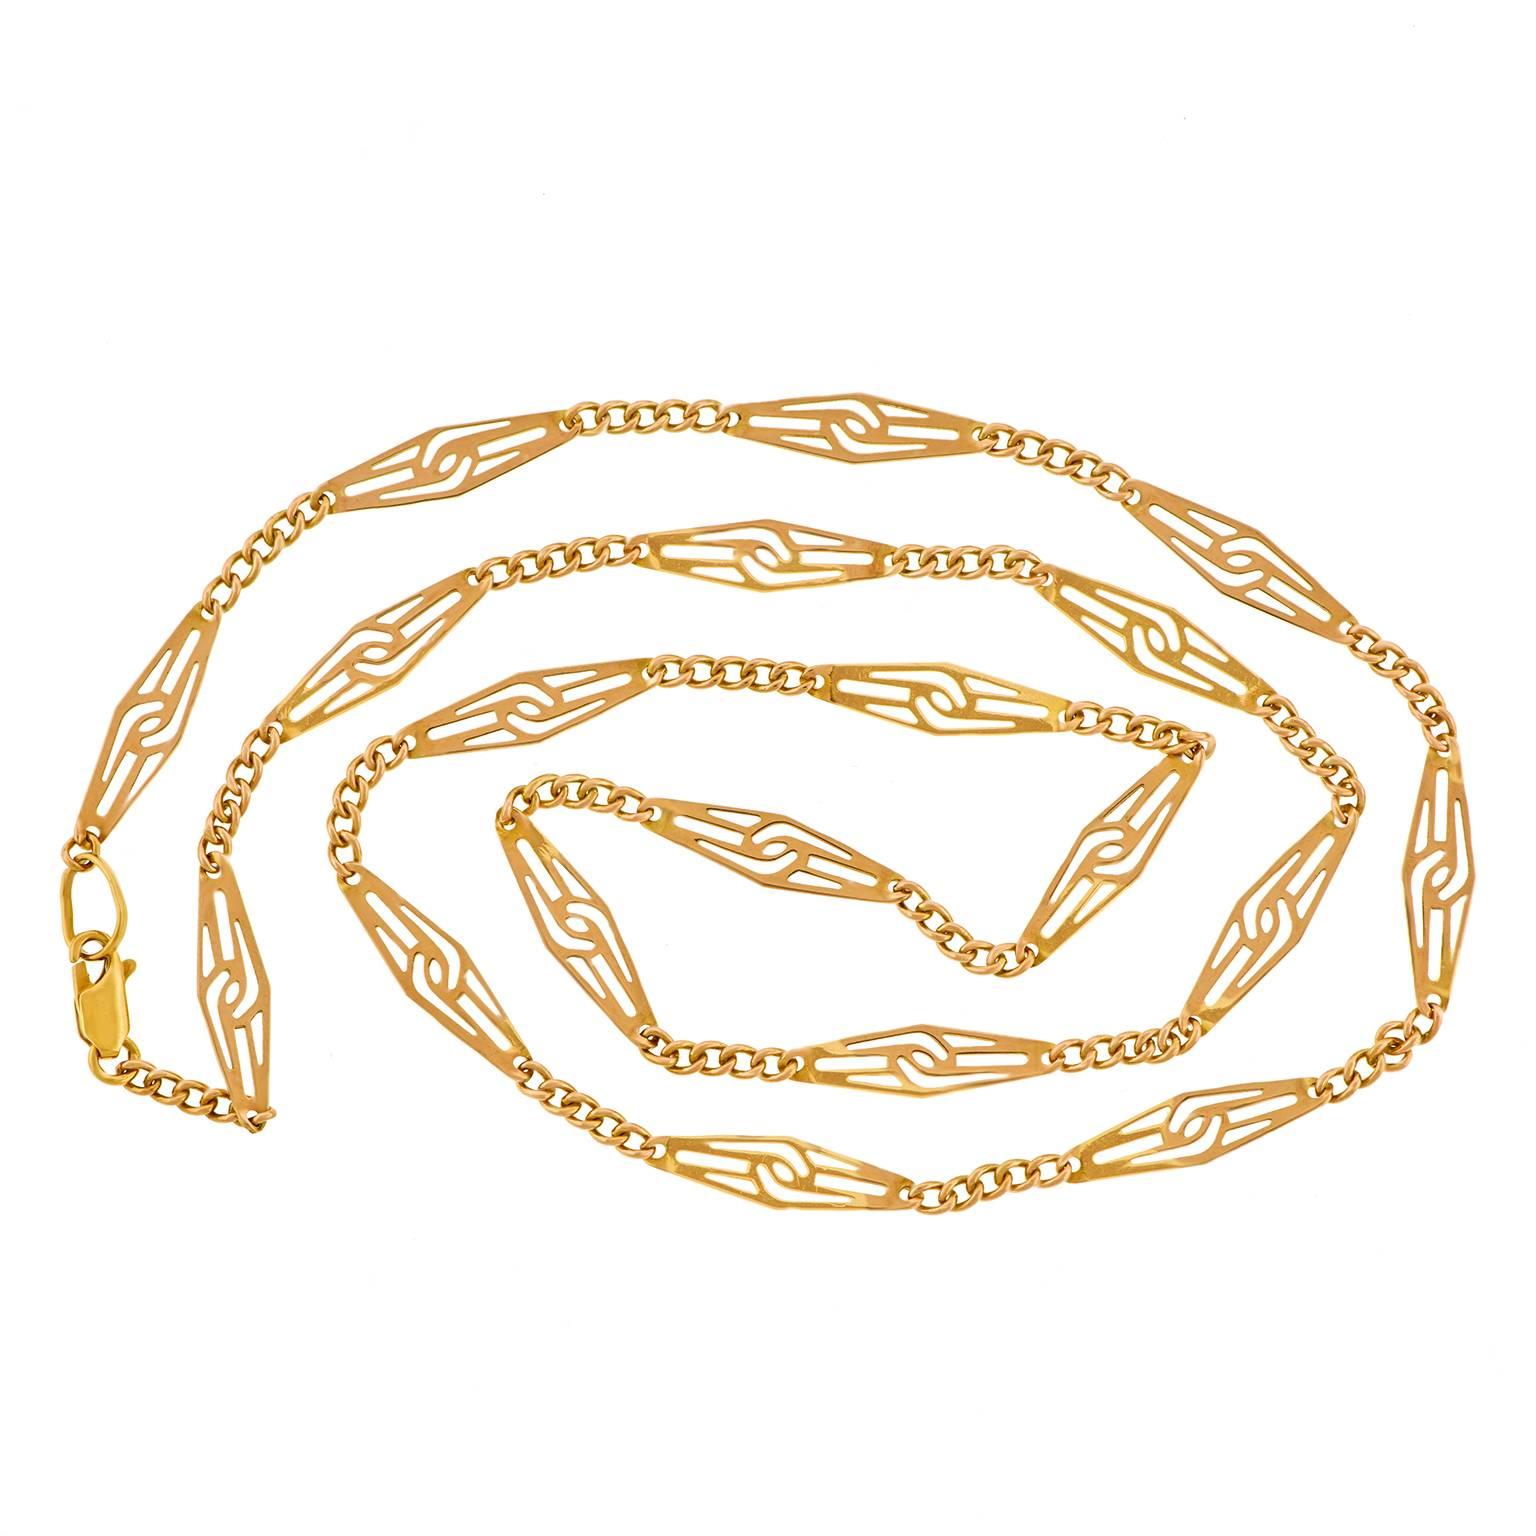 1960s Mod Gold Filigree Necklace